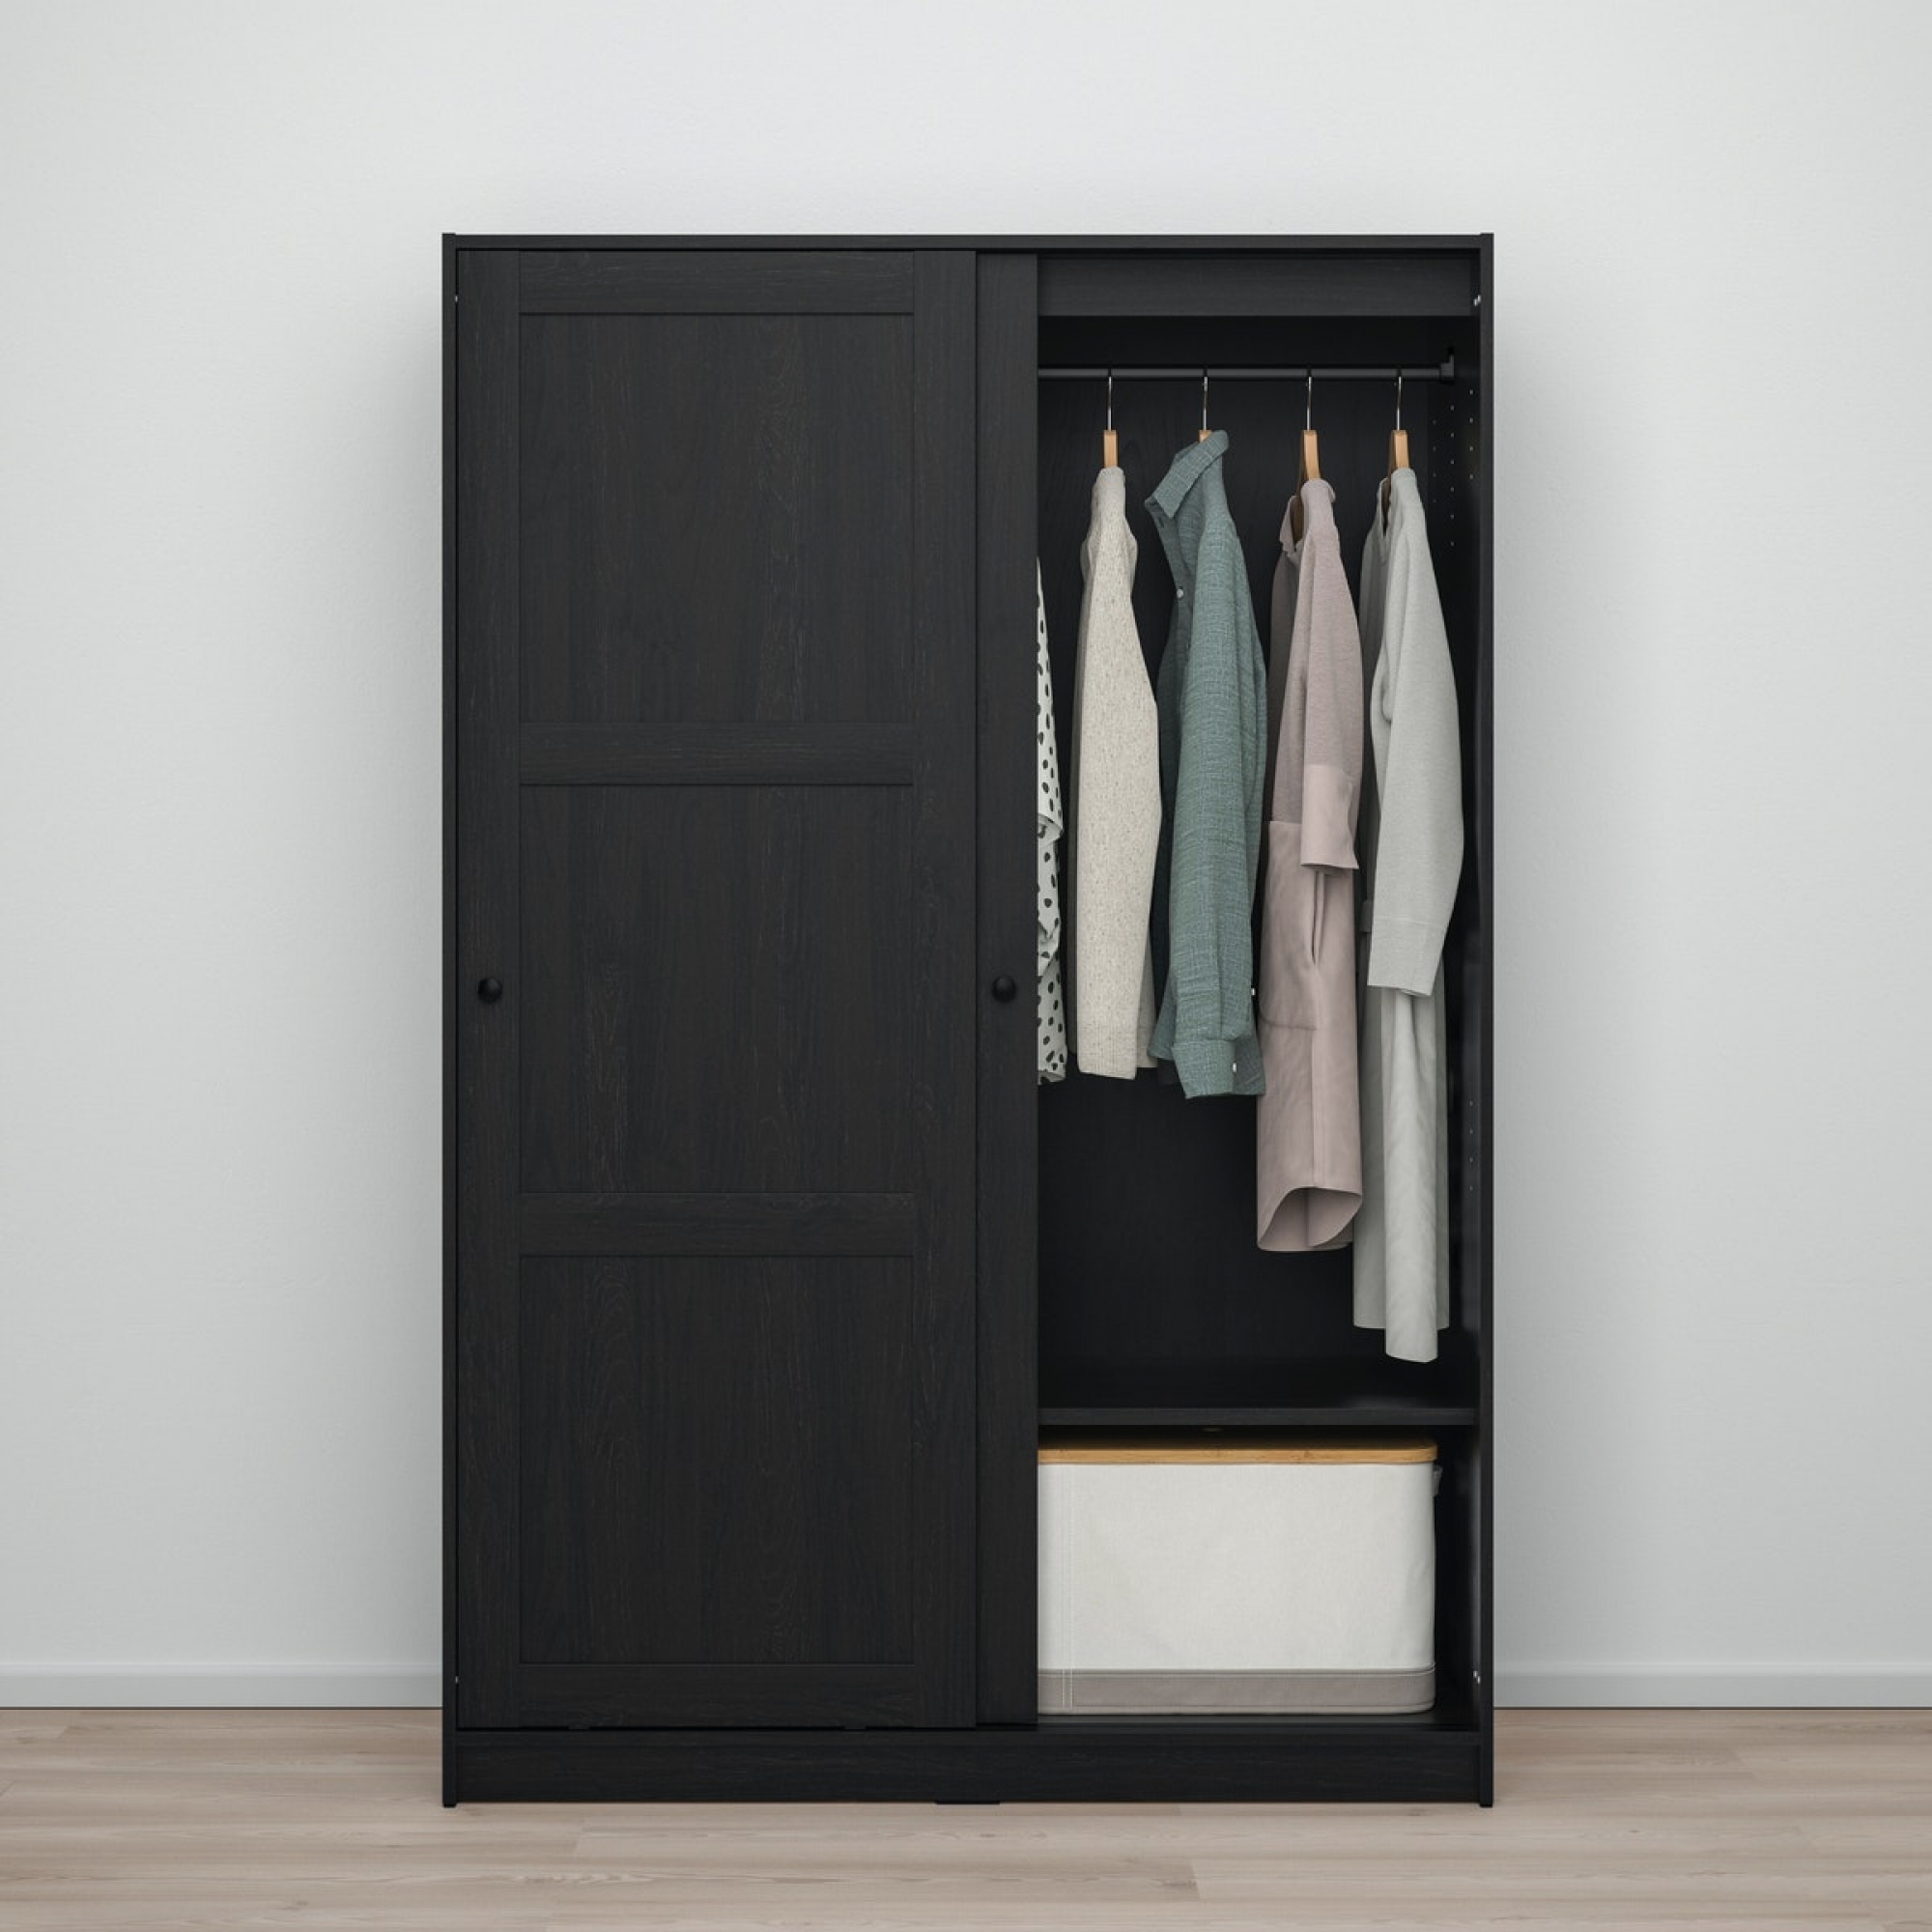 RAKKESTAD wardrobe  with sliding doors black brown IKEA  